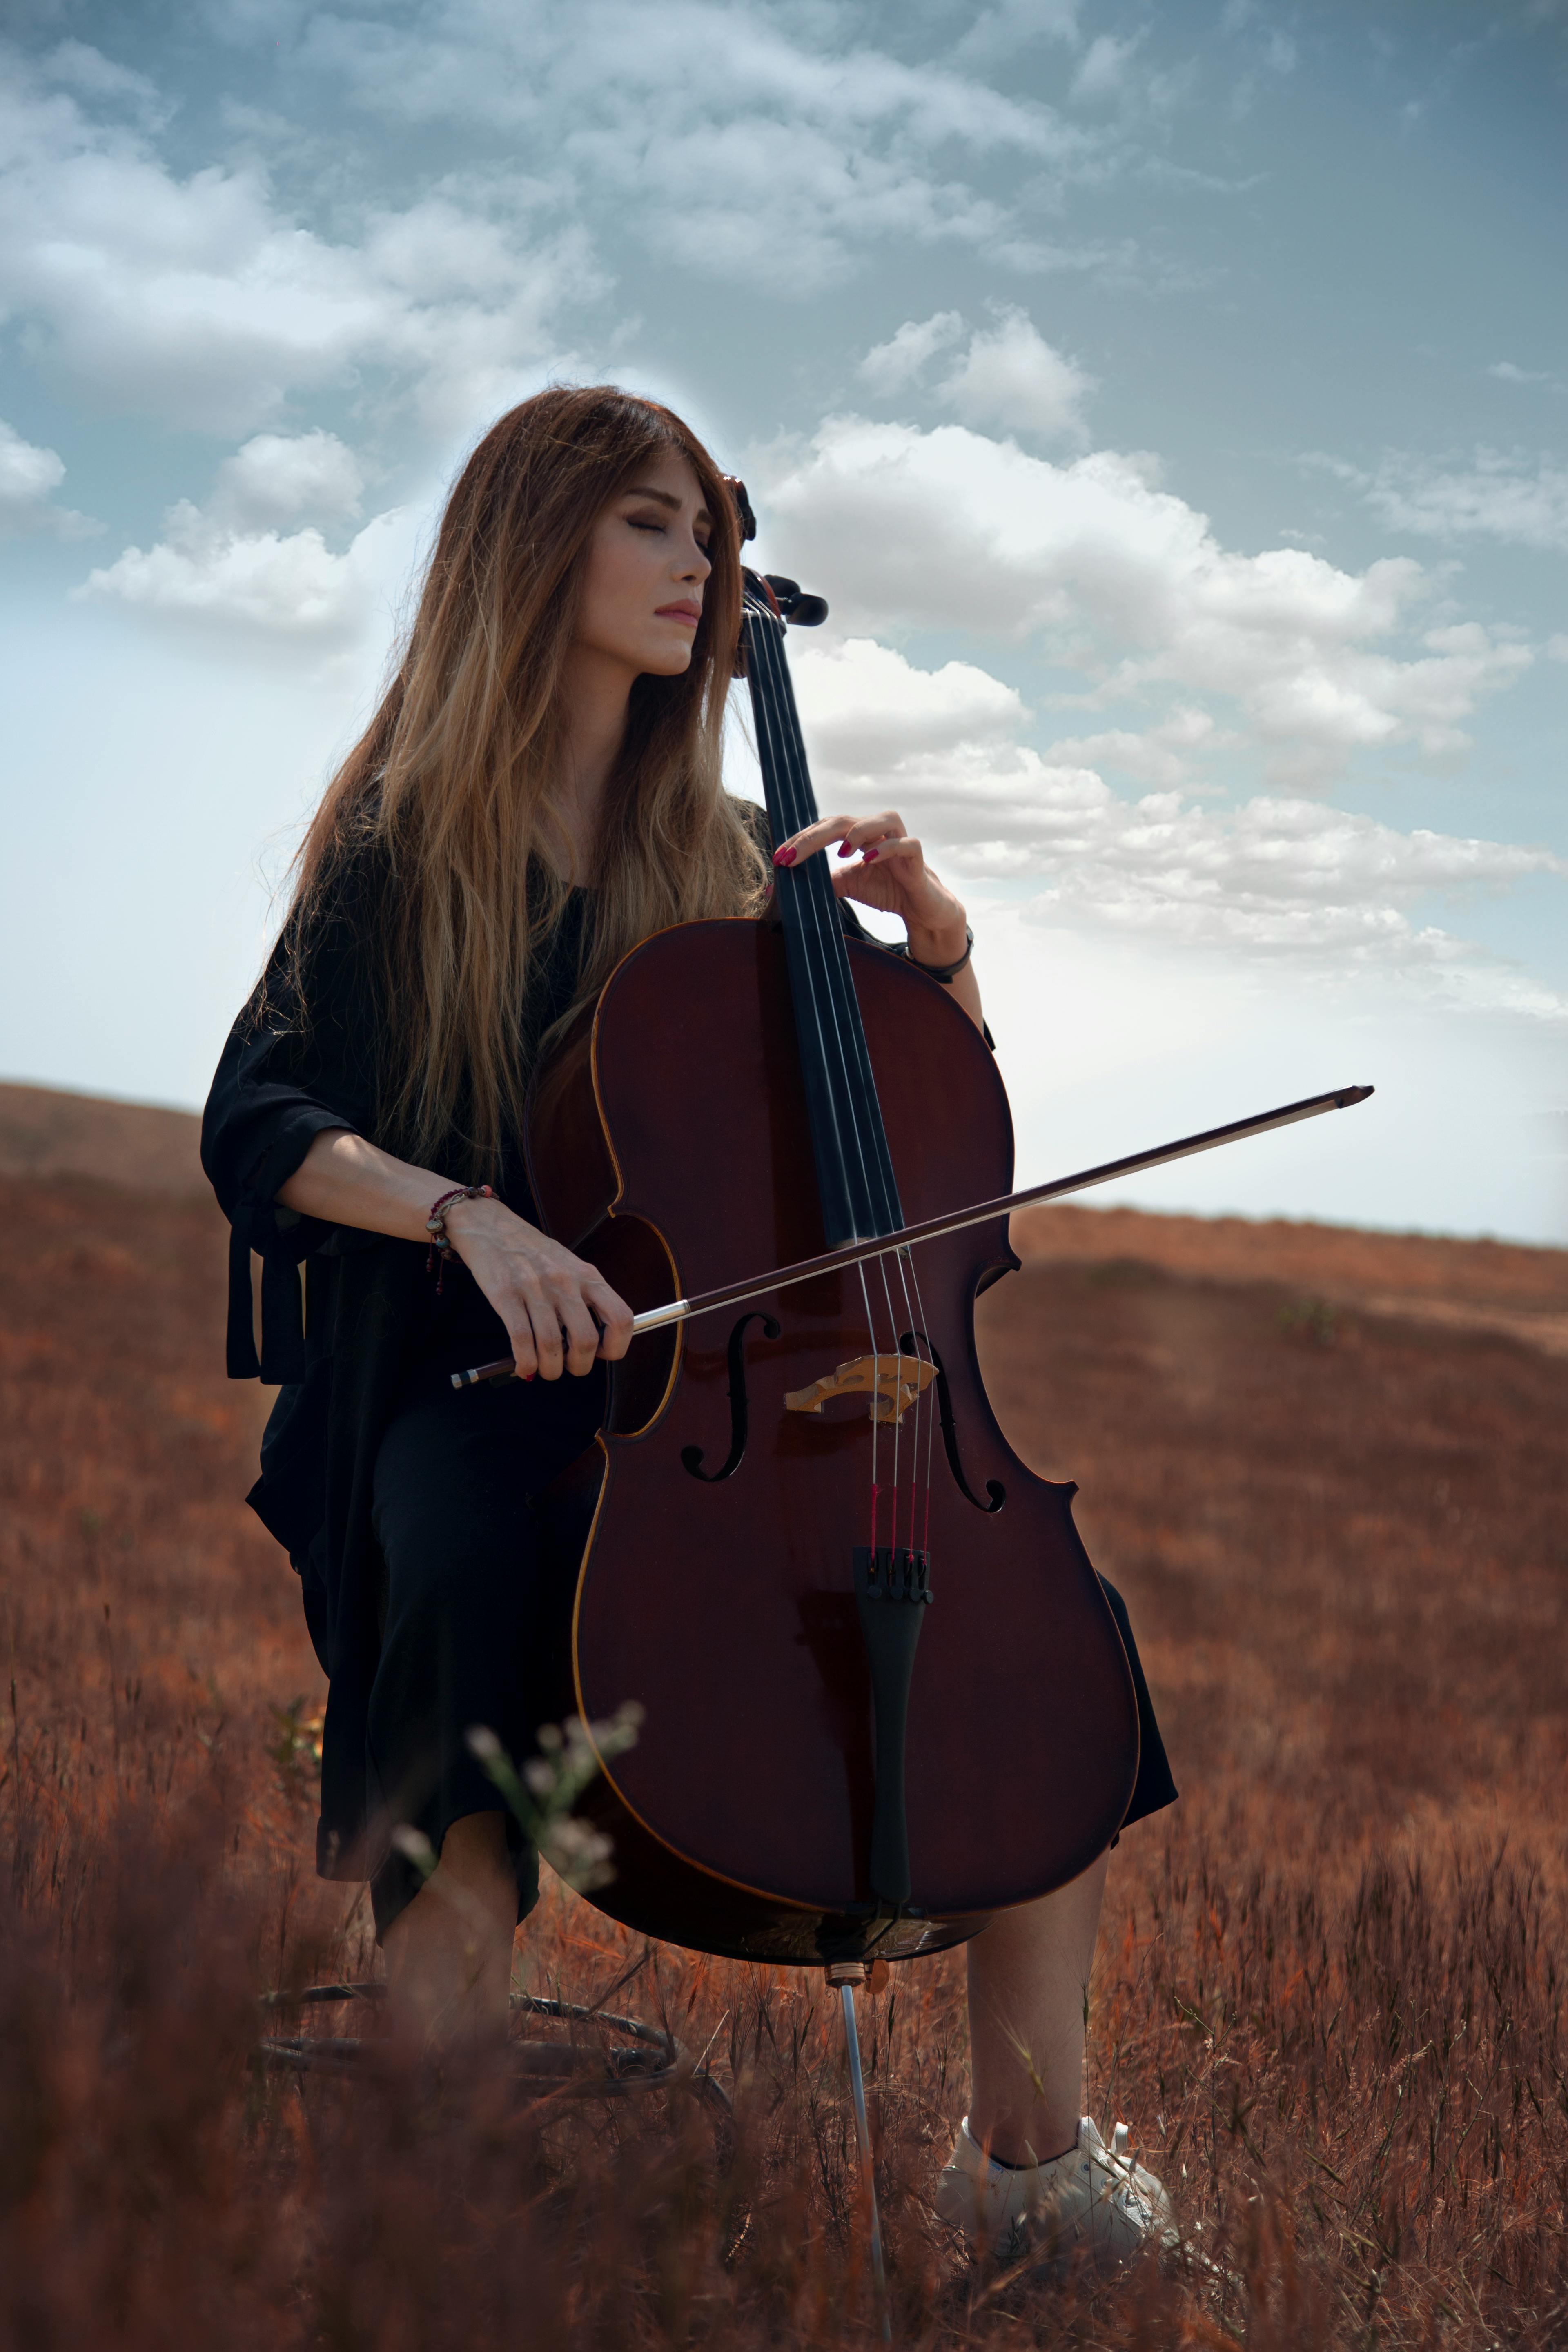 cello instrument